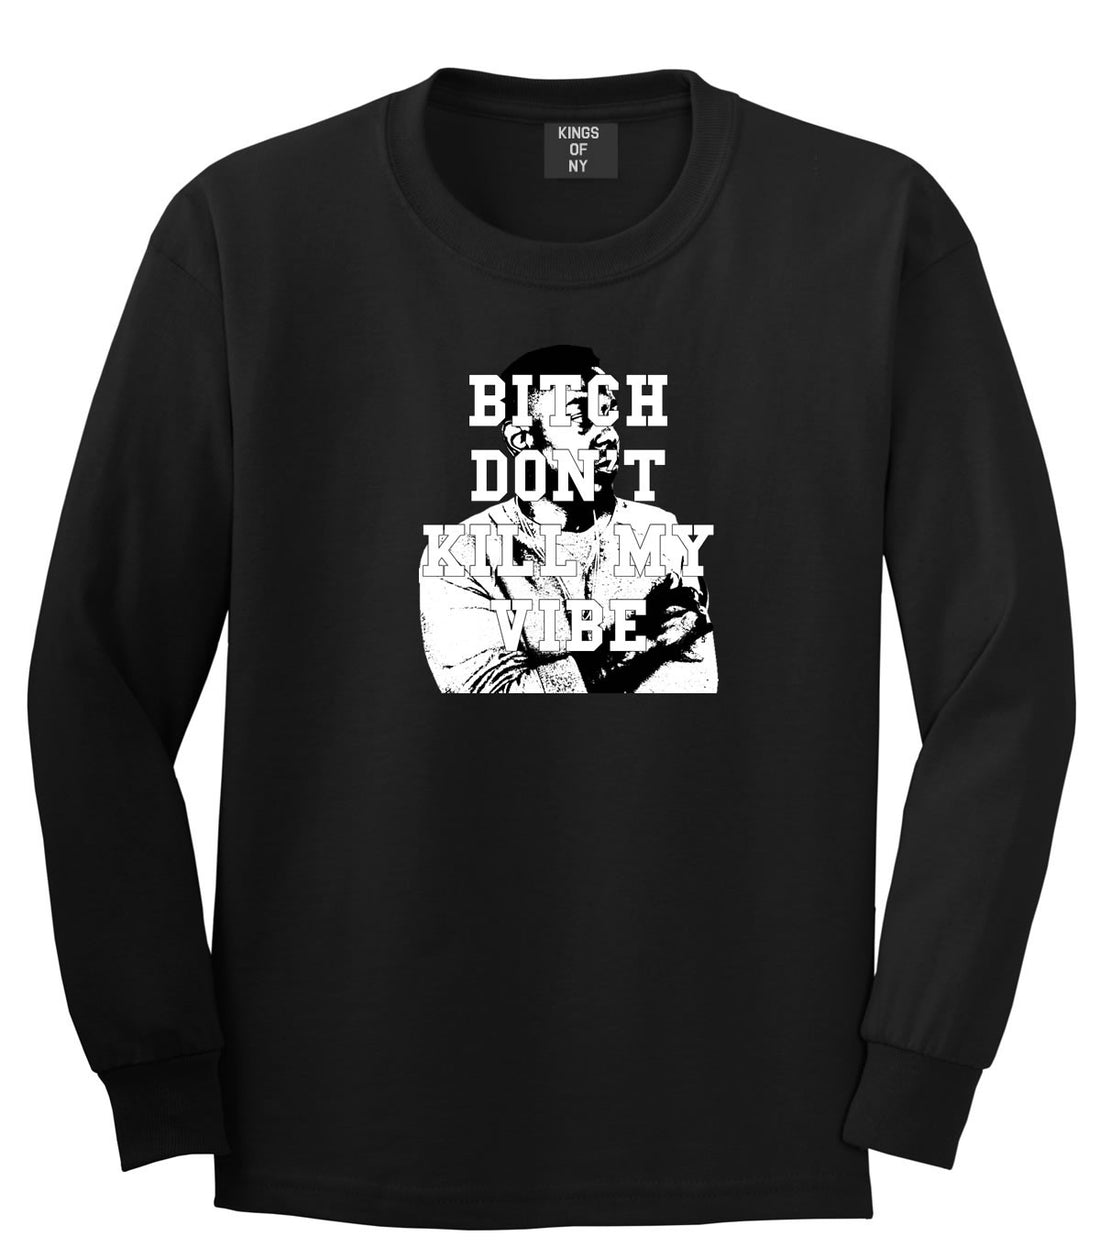 Bitch Dont Kill My Vibe Kendrick Long Sleeve Boys Kids T-Shirt In Black by Kings Of NY